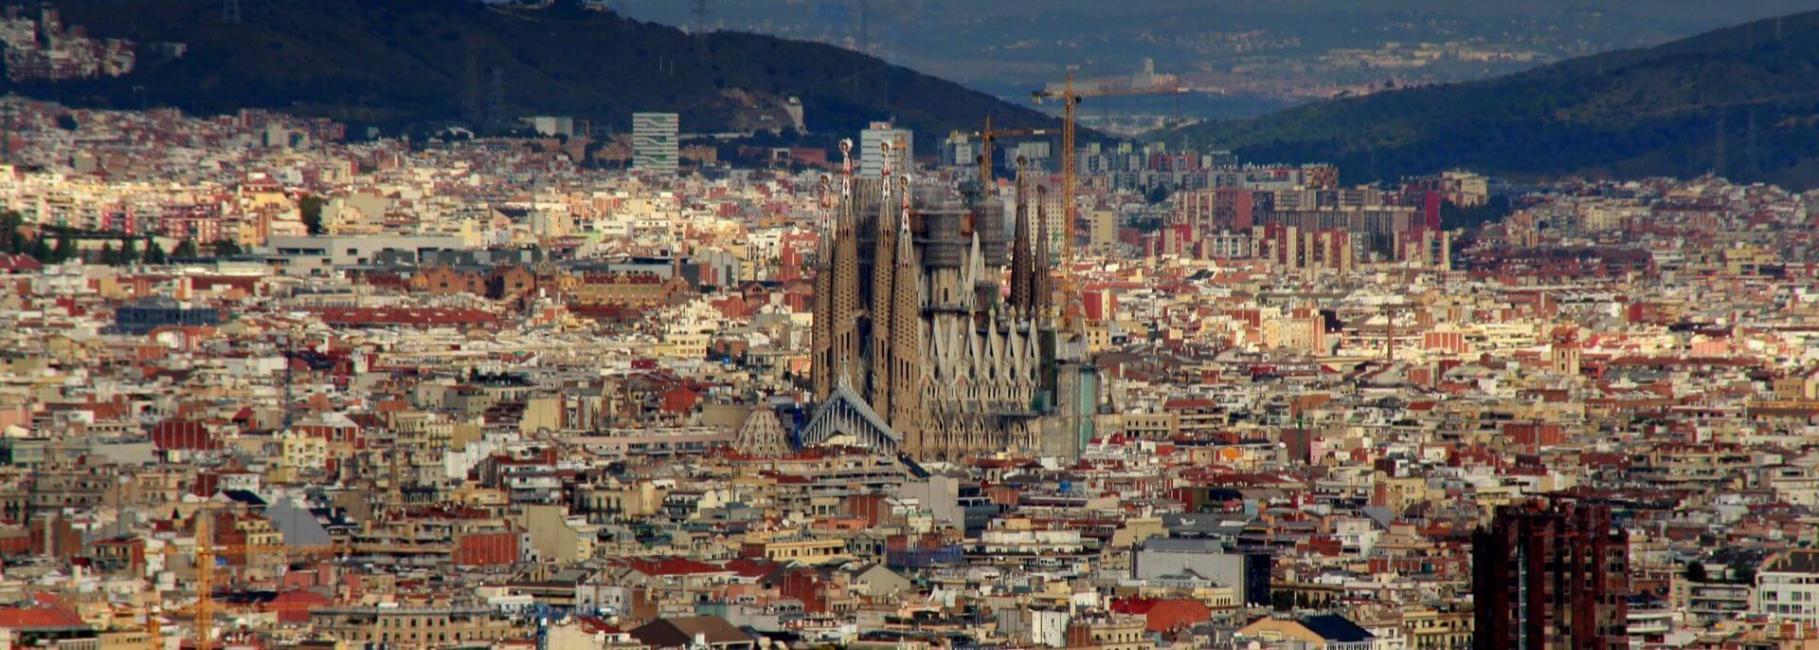 barcelona architecture trip header slk he